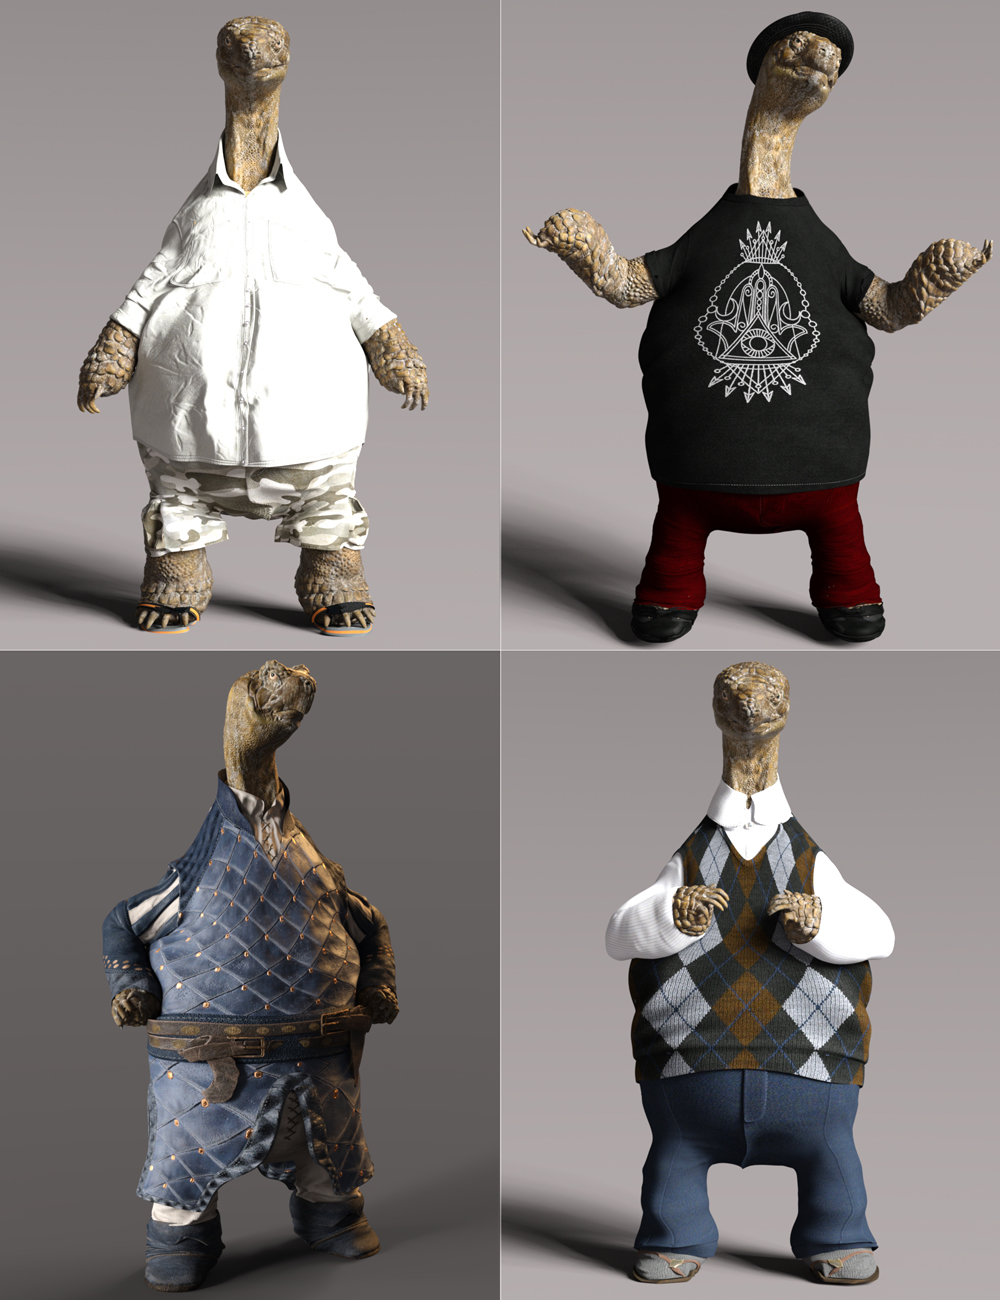 Storybook Turtle HD for Genesis 8.1 Males by: JoeQuick, 3D Models by Daz 3D